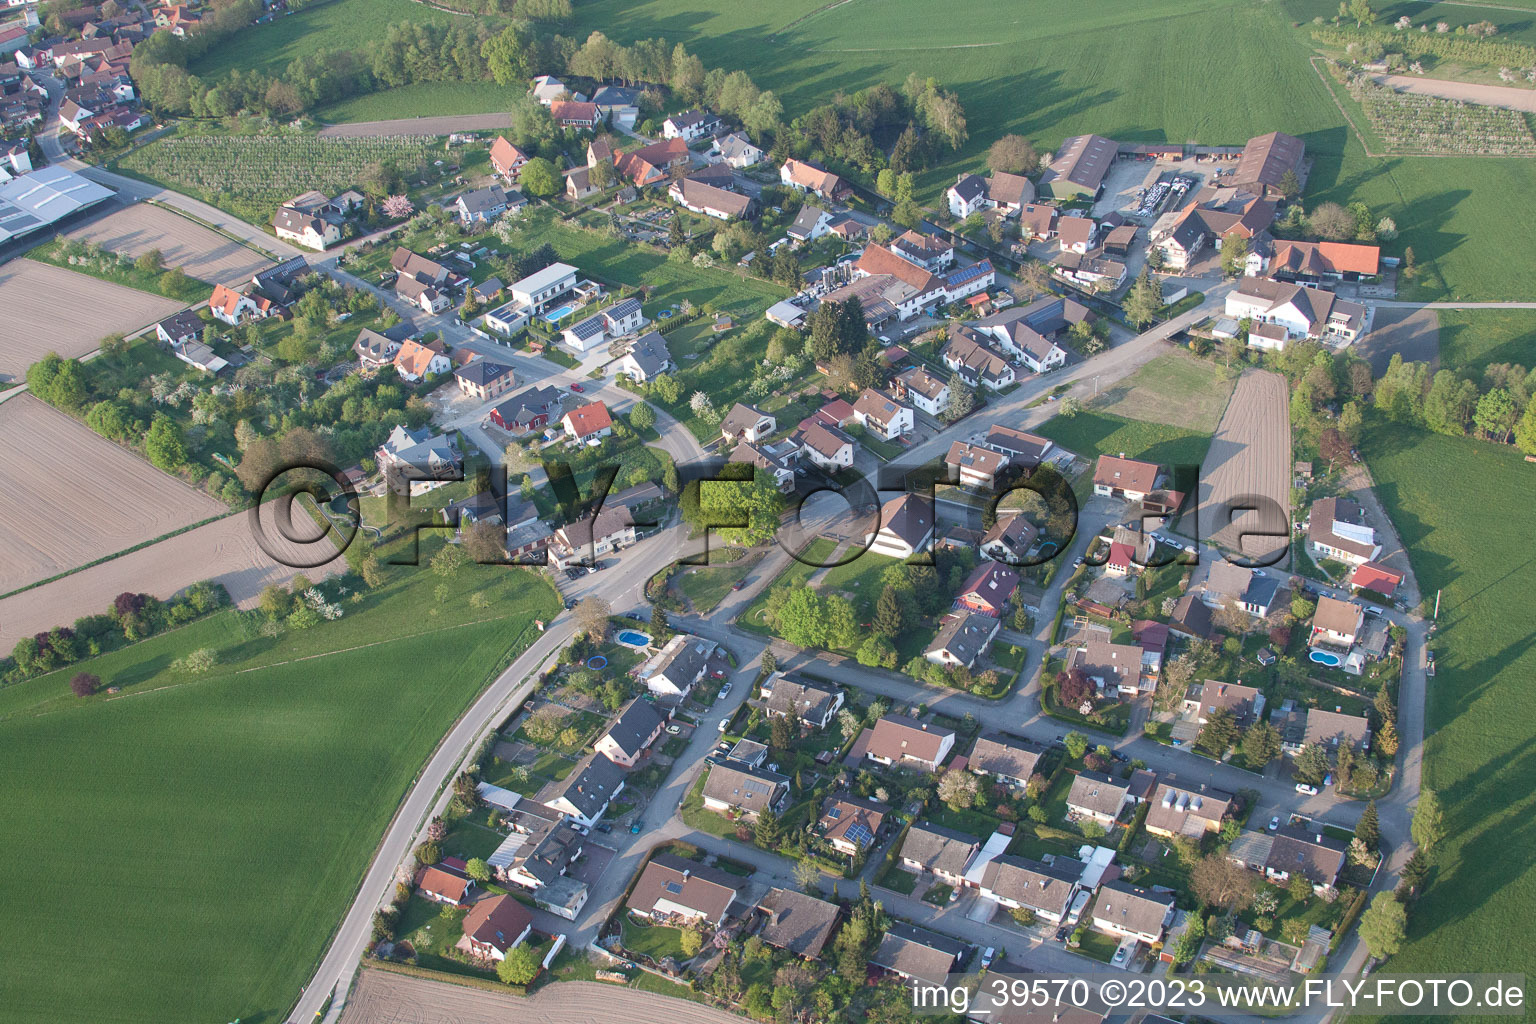 Aerial photograpy of District Rheinbischofsheim in Rheinau in the state Baden-Wuerttemberg, Germany